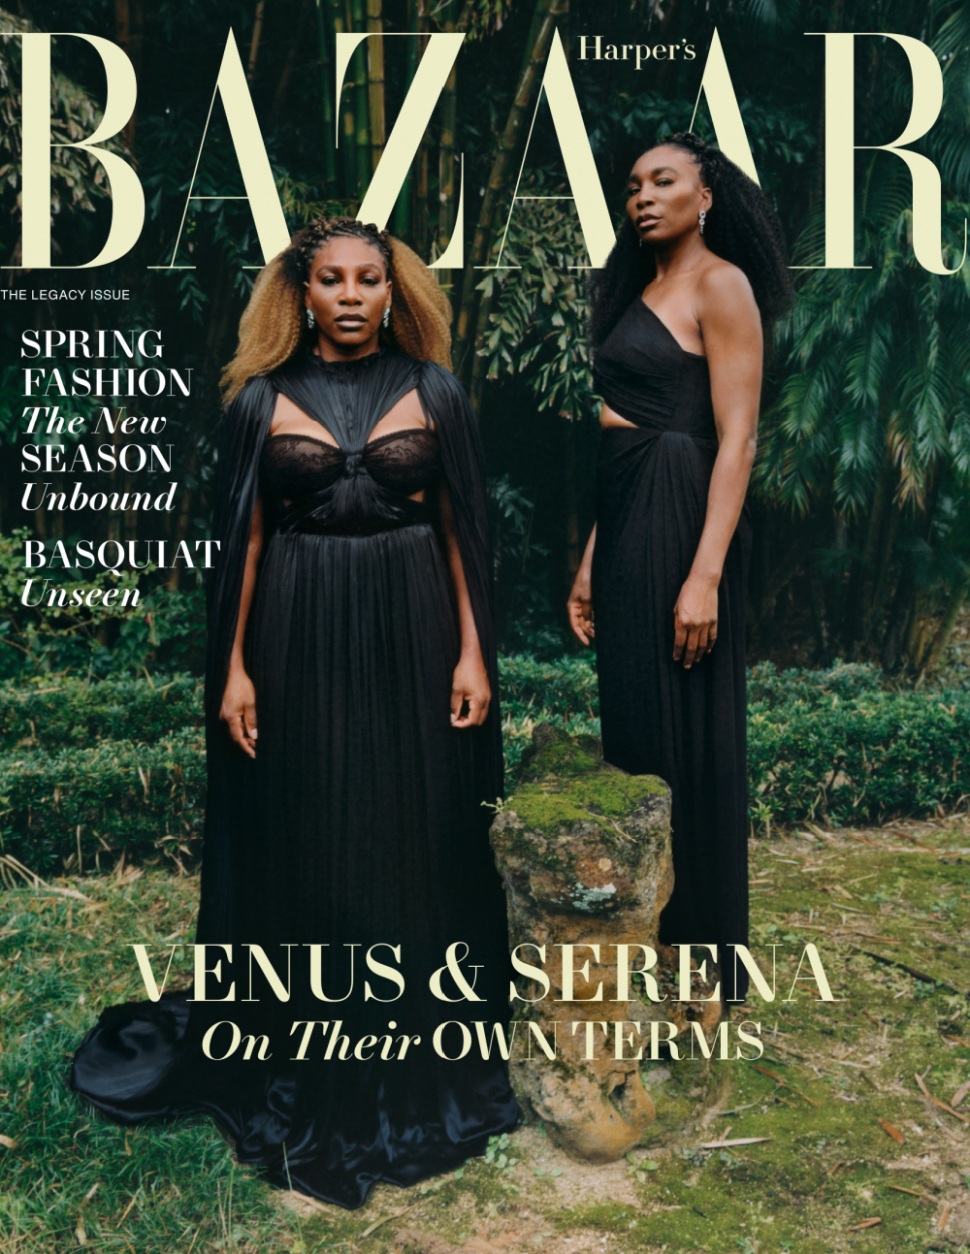 Venus and Serena Williams HB cover